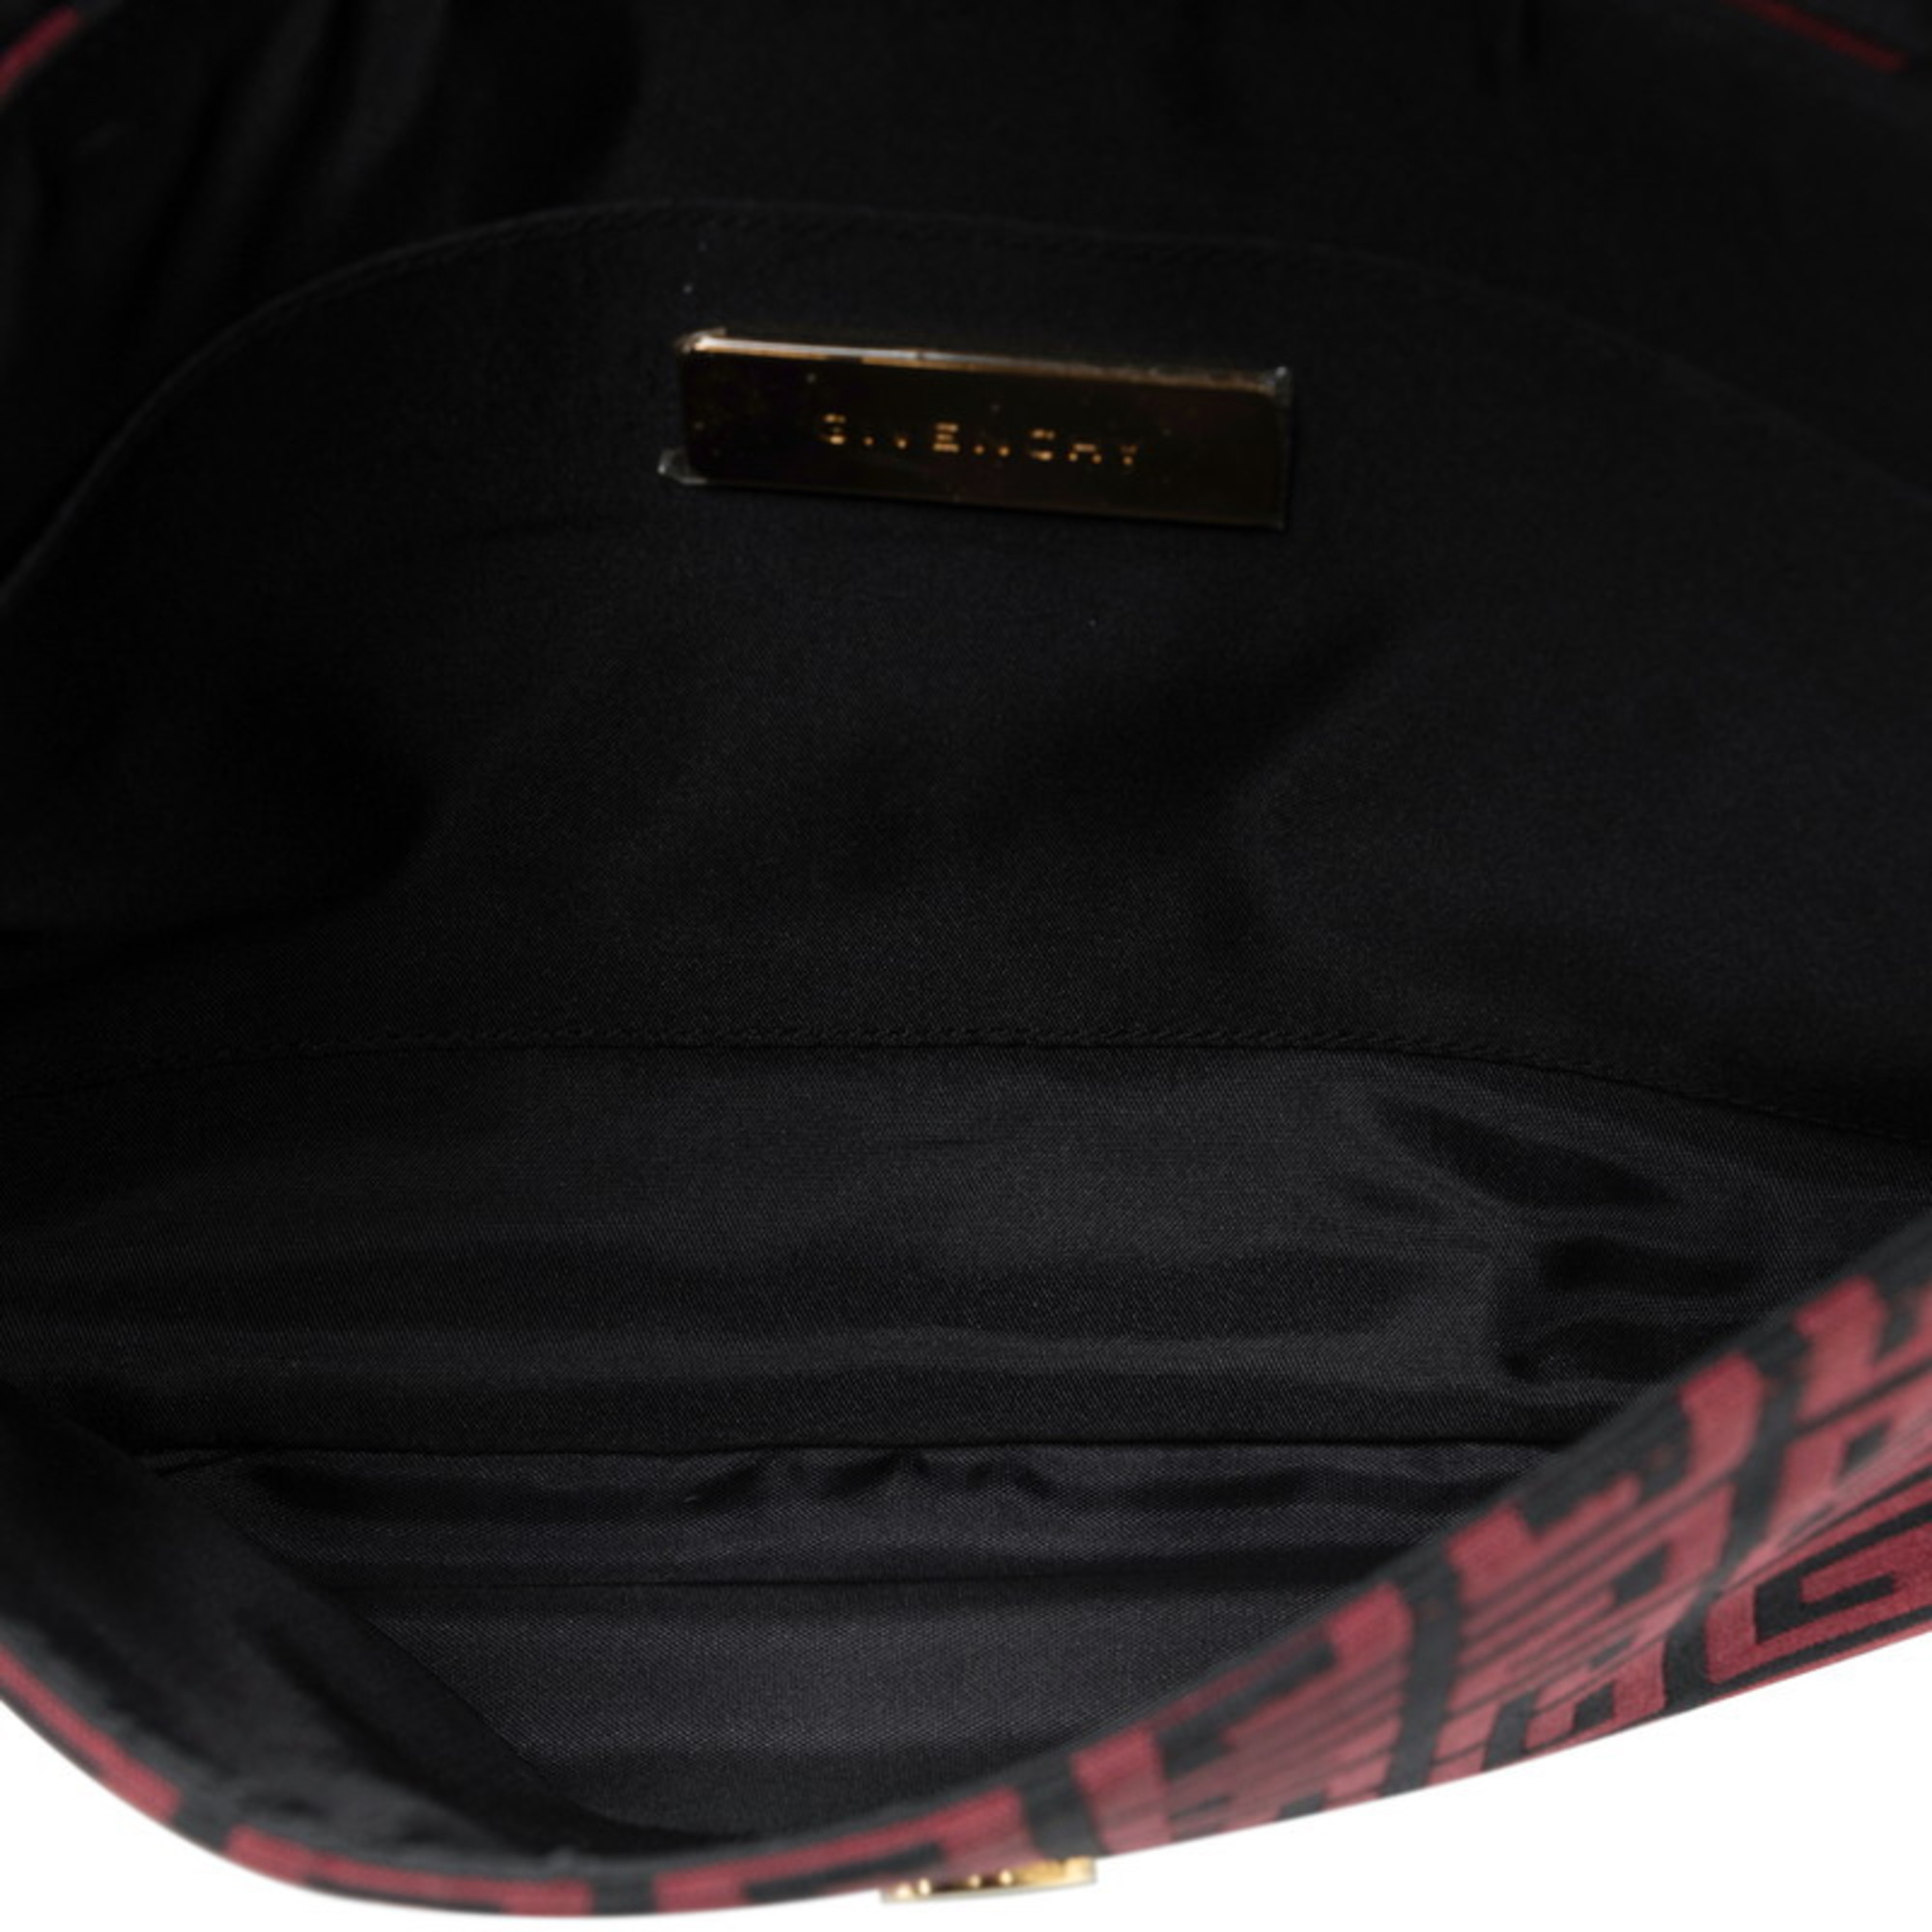 Givenchy Tassel Bag Handbag Purple Black Canvas Leather Women's